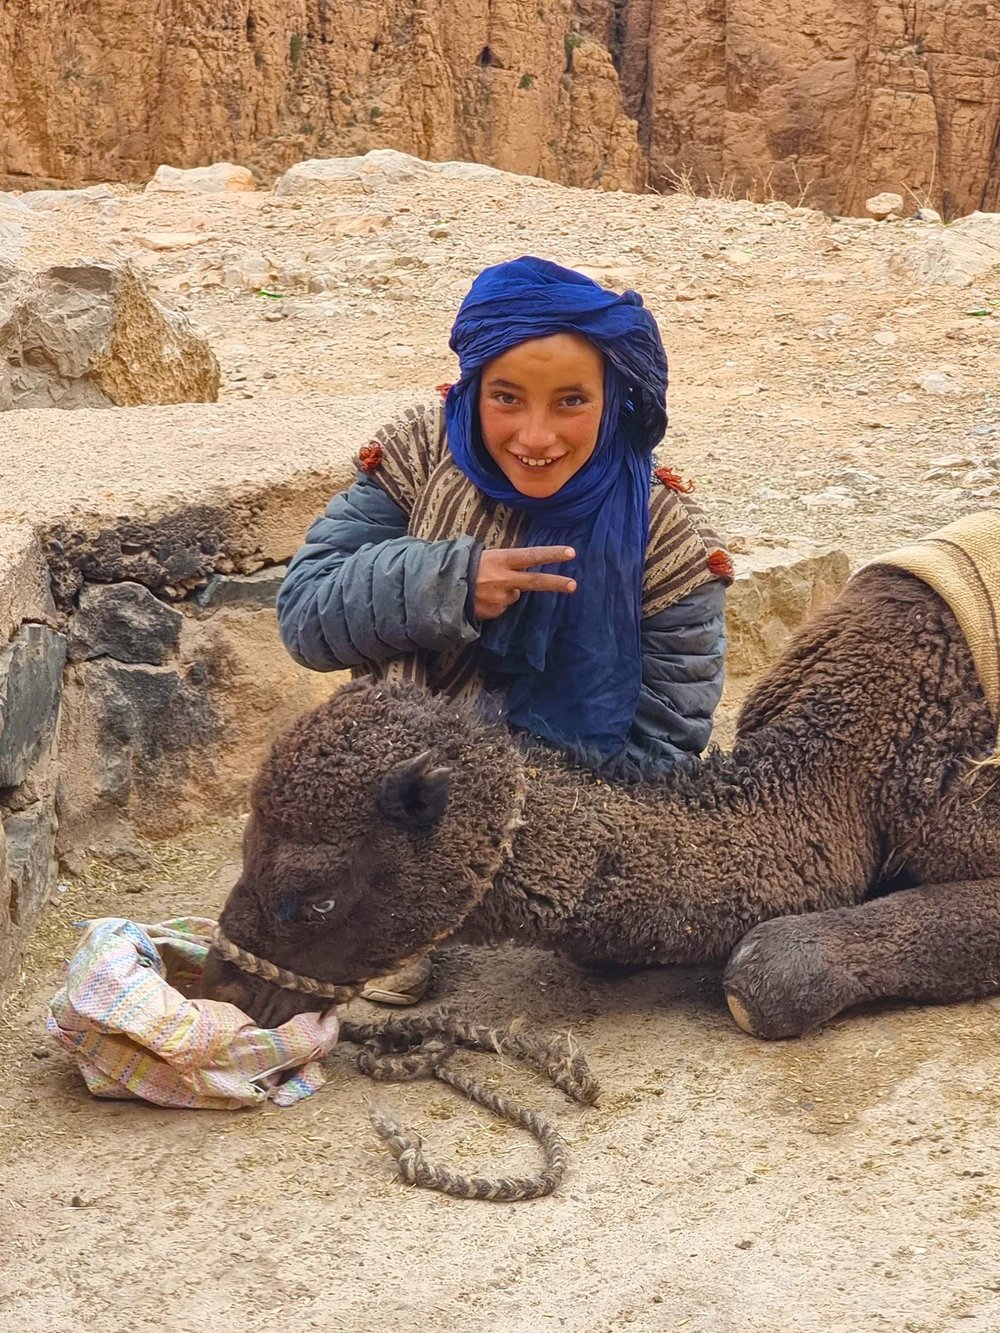 Dades-Gorge-nomad-boy-with-camel.jpg